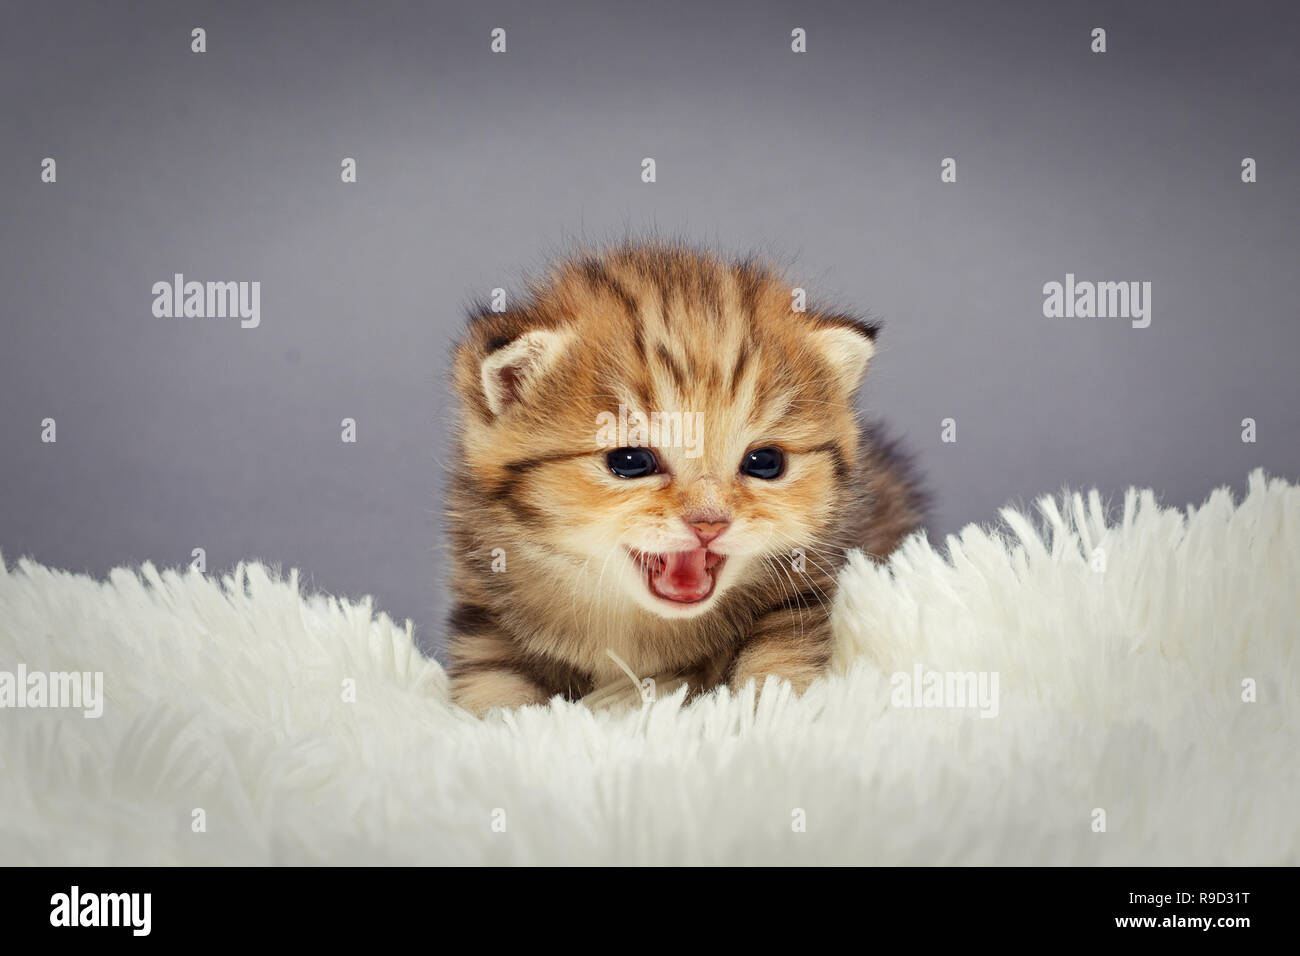 Little, meowing British kitten lying on white fur Stock Photo